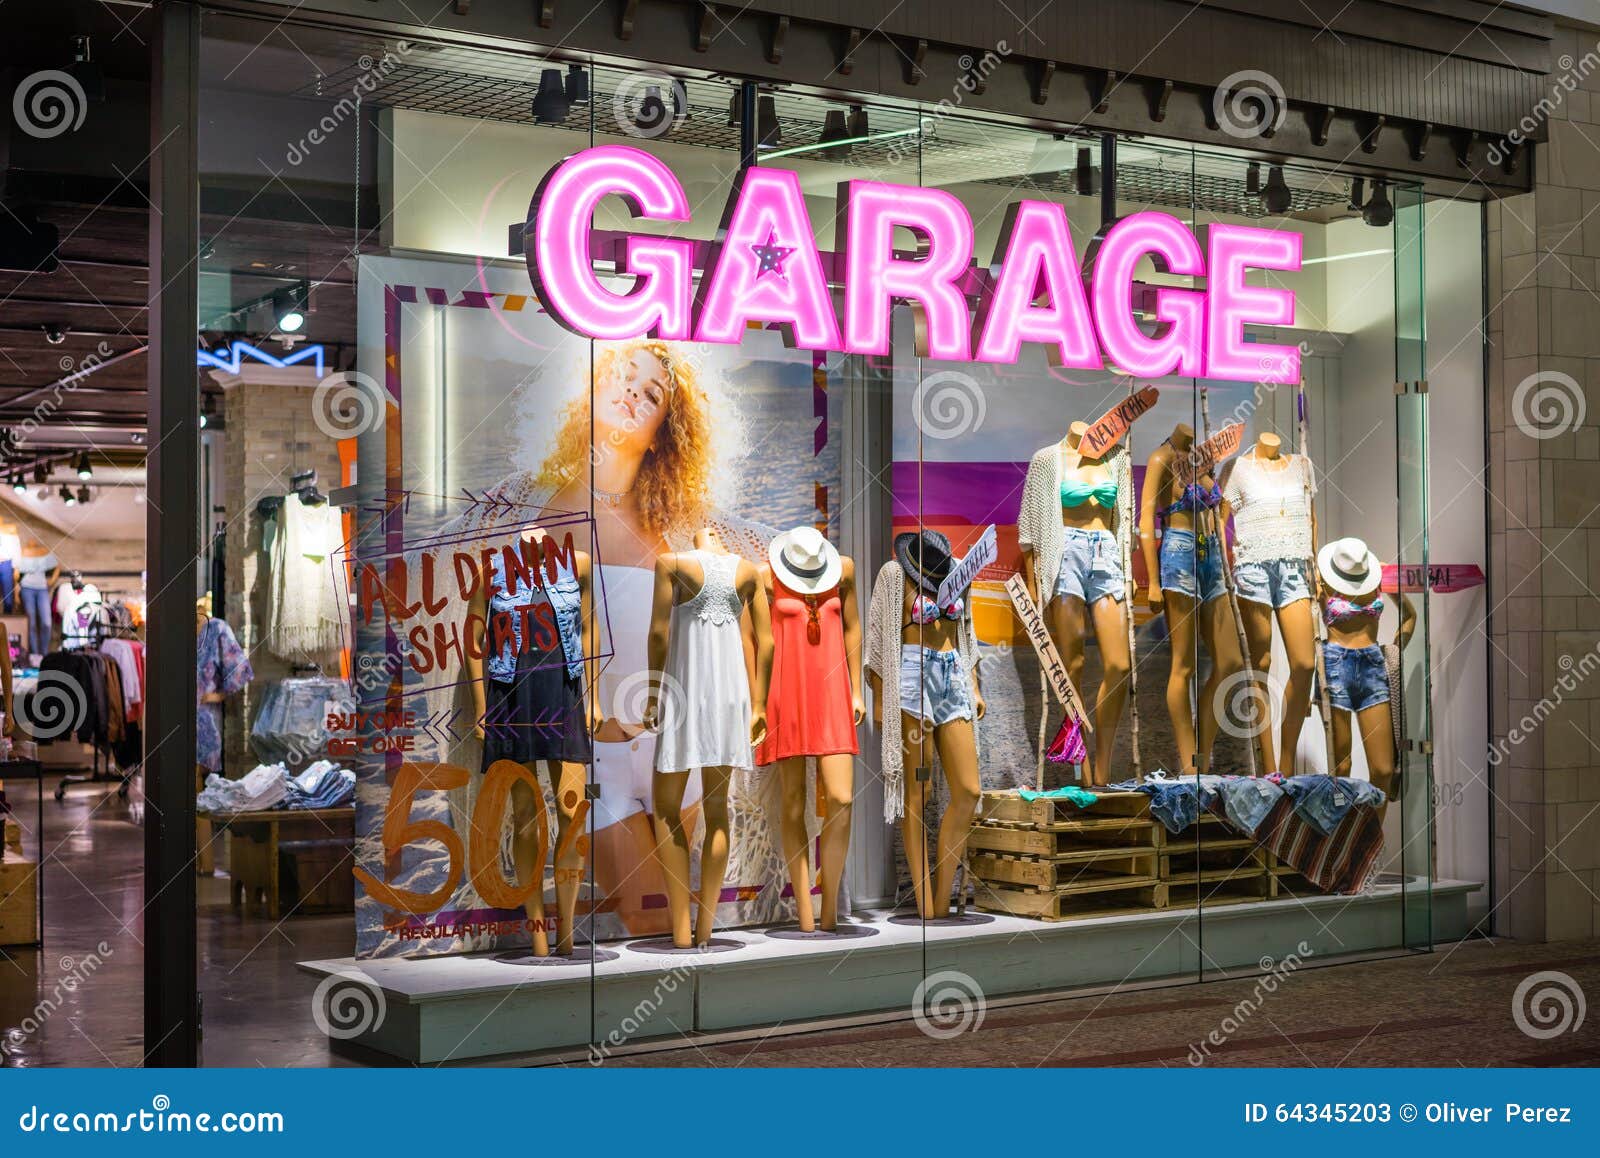 Garage Clothing Store Editorial Stock Photo - Image: 64345203
